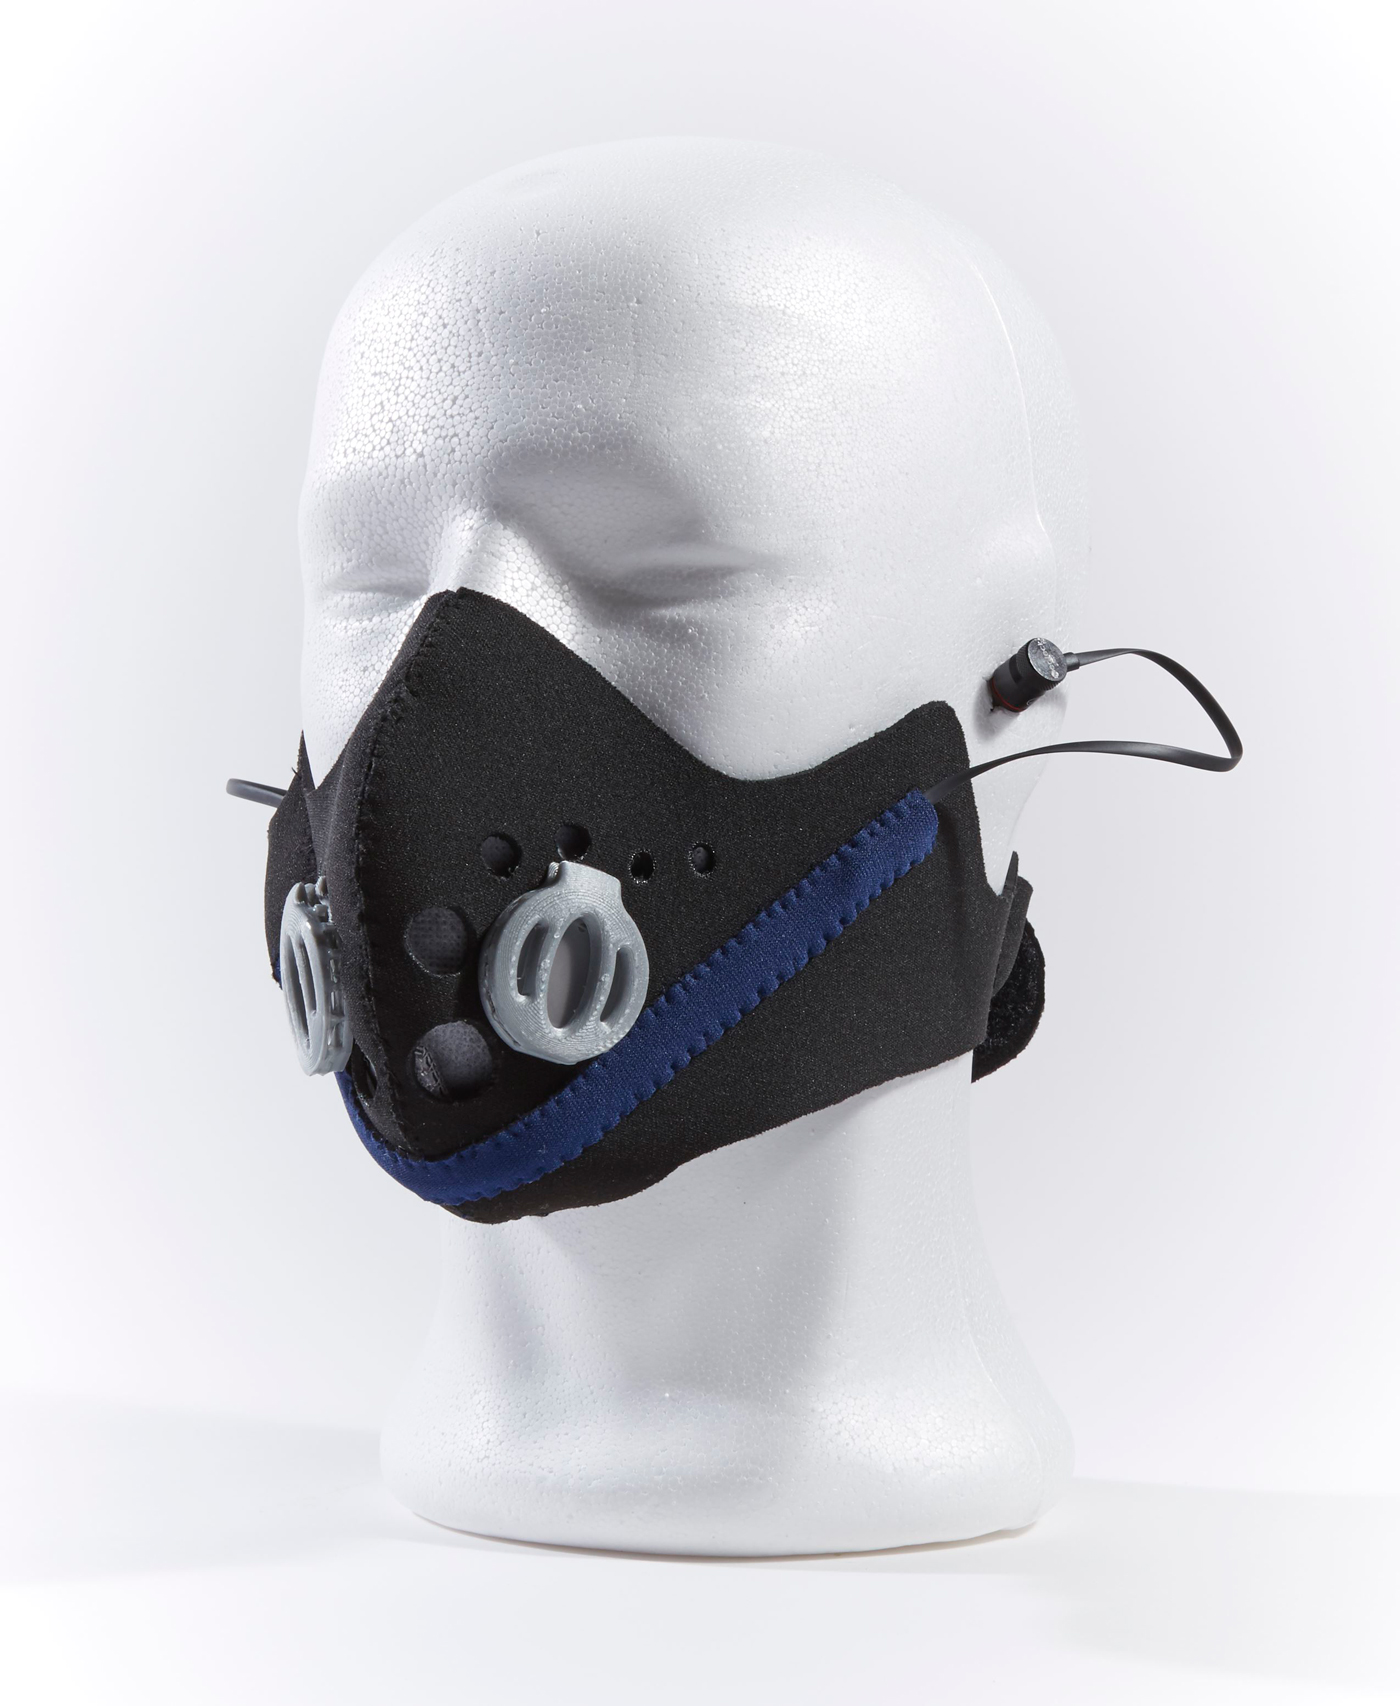 Sean helan Filtration Mask Product DesignCopy of Copy of Sean helan Filtration Mask Opt01